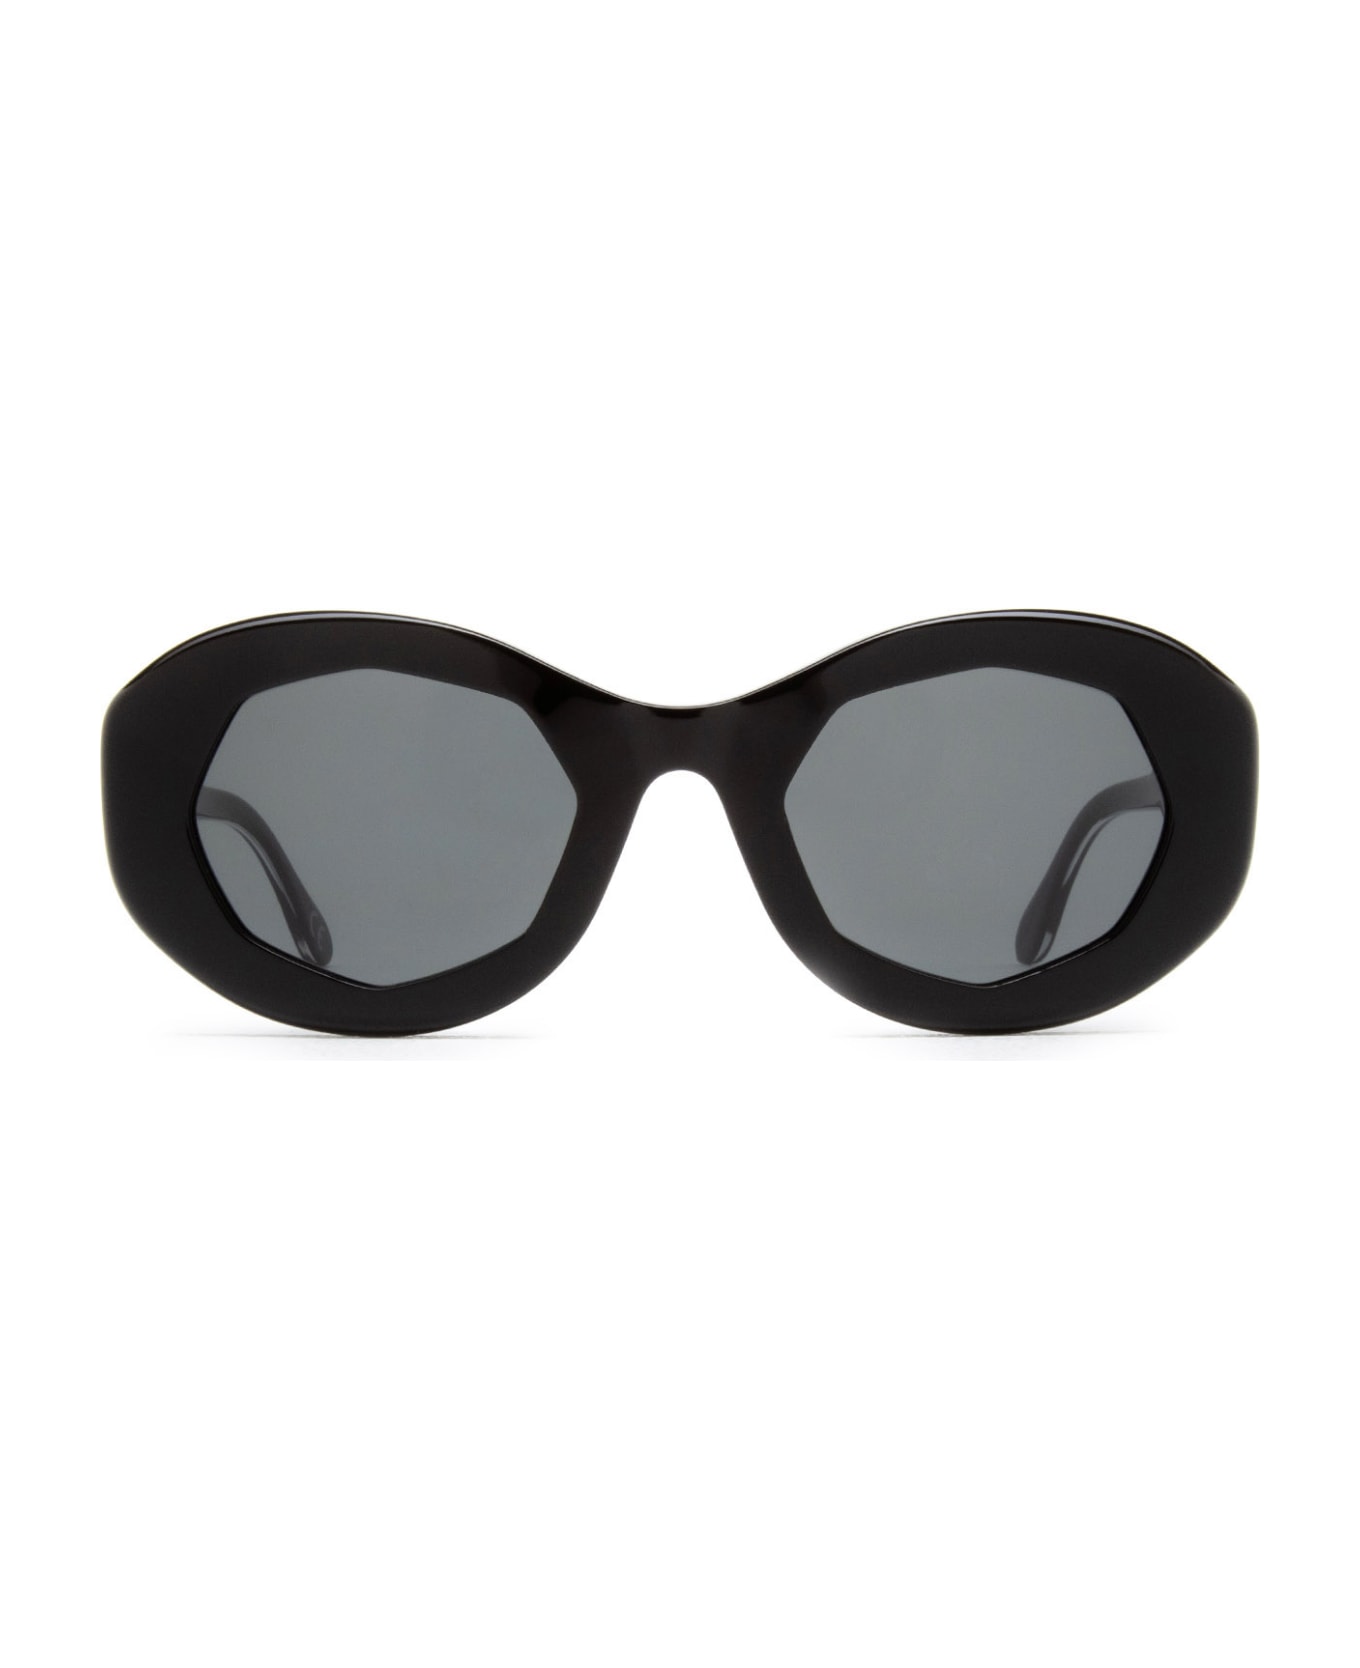 Marni Eyewear Mount Bromo Blck Fndtn Sunglasses - Blck Fndtn サングラス